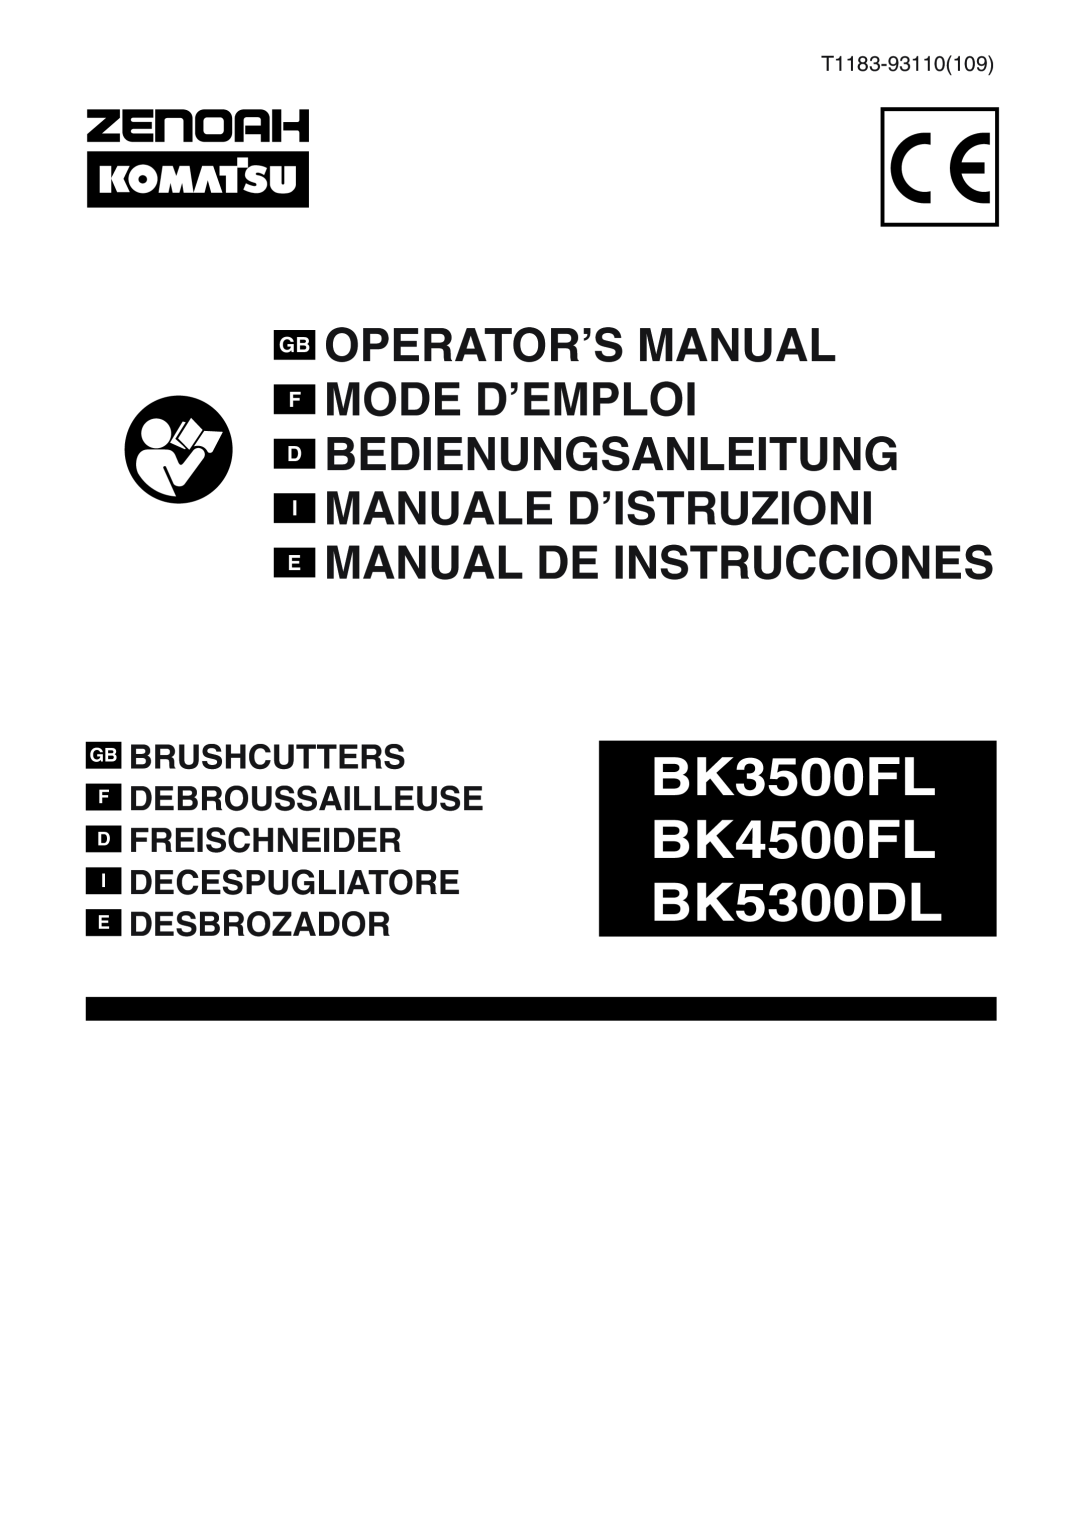 Zenoah manual BK3500FL BK4500FL BK5300DL, Gb Brushcutters F Debroussailleuse D Freischneider, T1183-93110109 